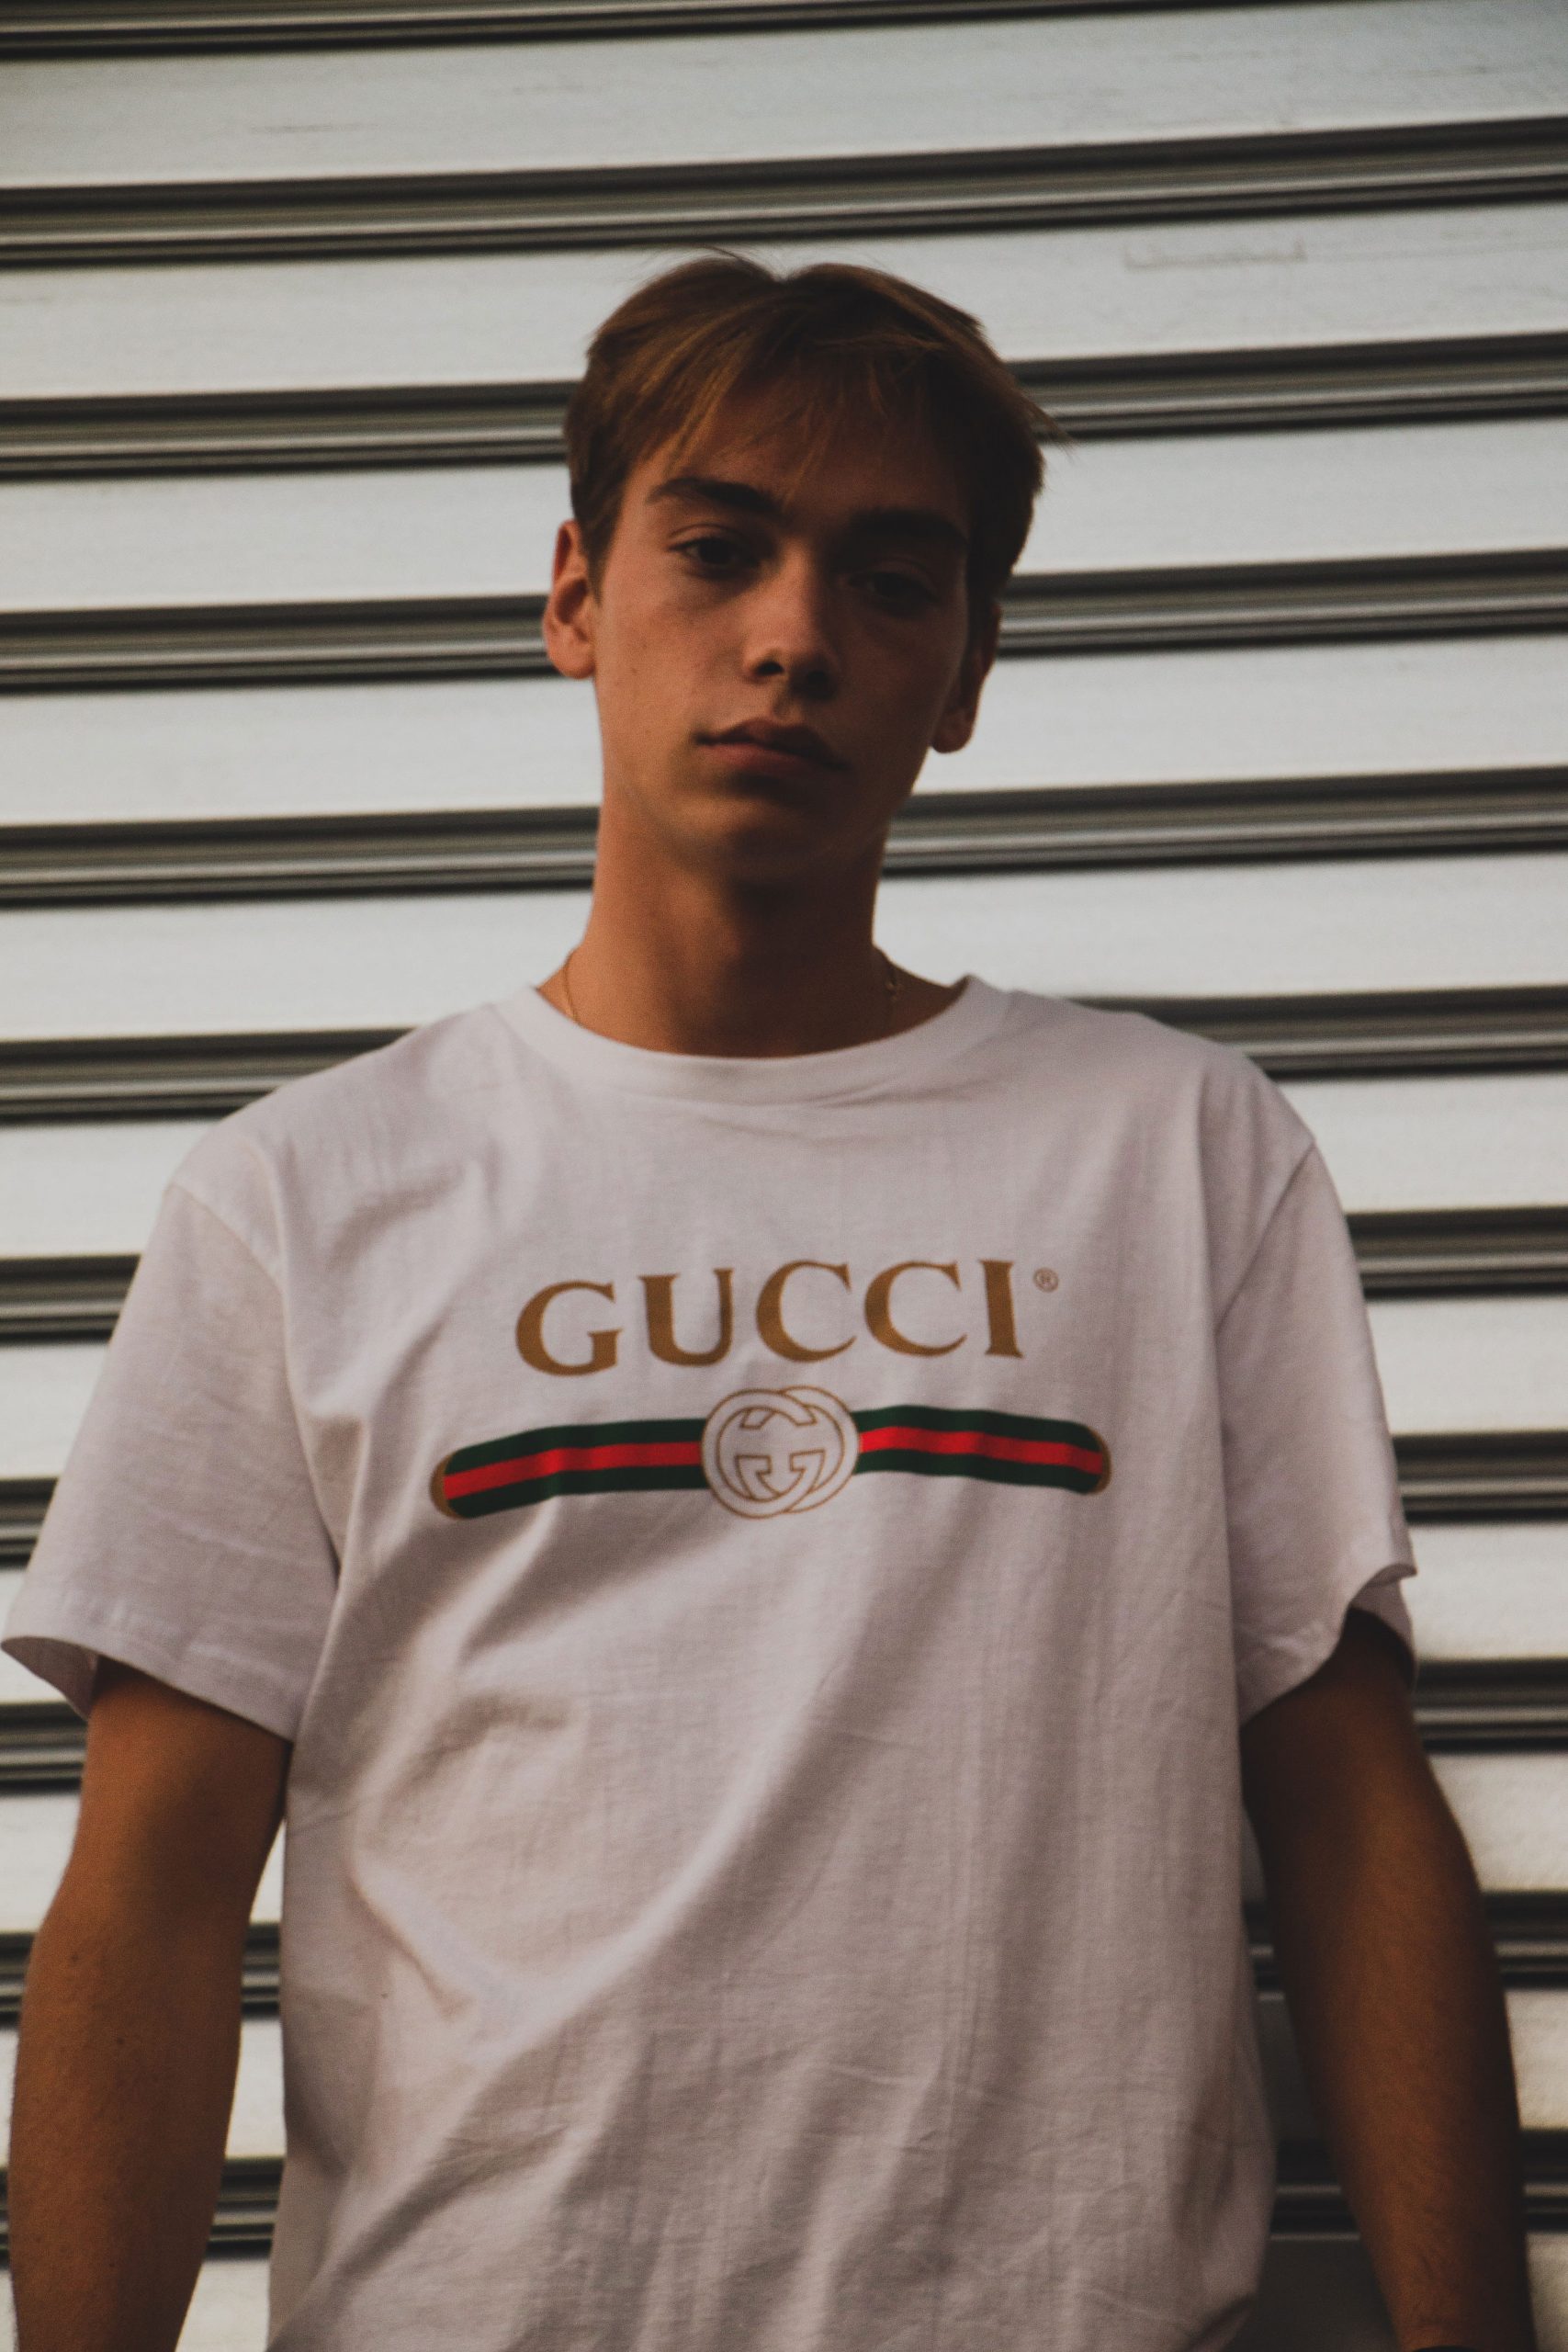 Gucci shirt wallpaper, sneaker, lifestyle, street, streetwear